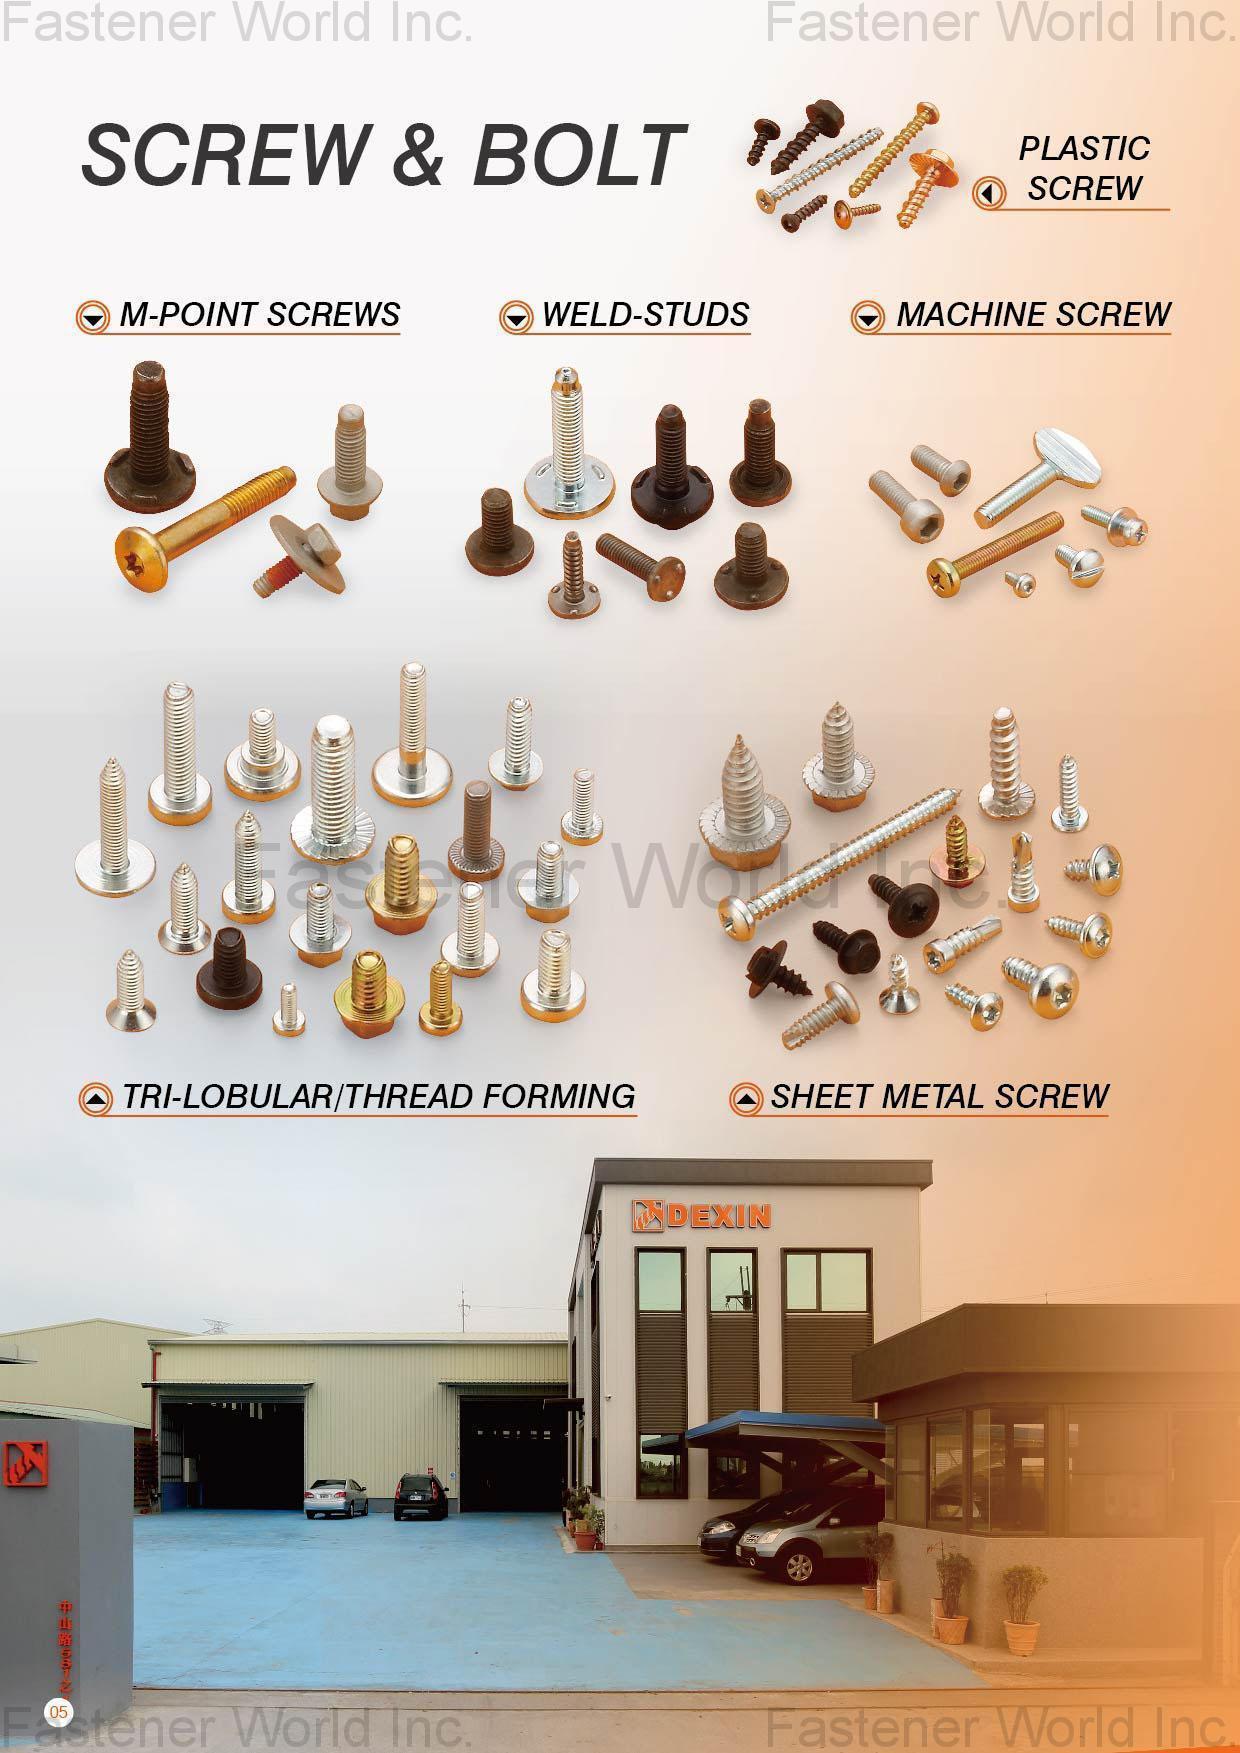 ORANGE FASTENERS , Screws & Bolts: Plastic Screws, M-Point Screws, Weld-Studs, Machine Screws, Tri-lobular / Thread Forming, Sheet Metal Screws